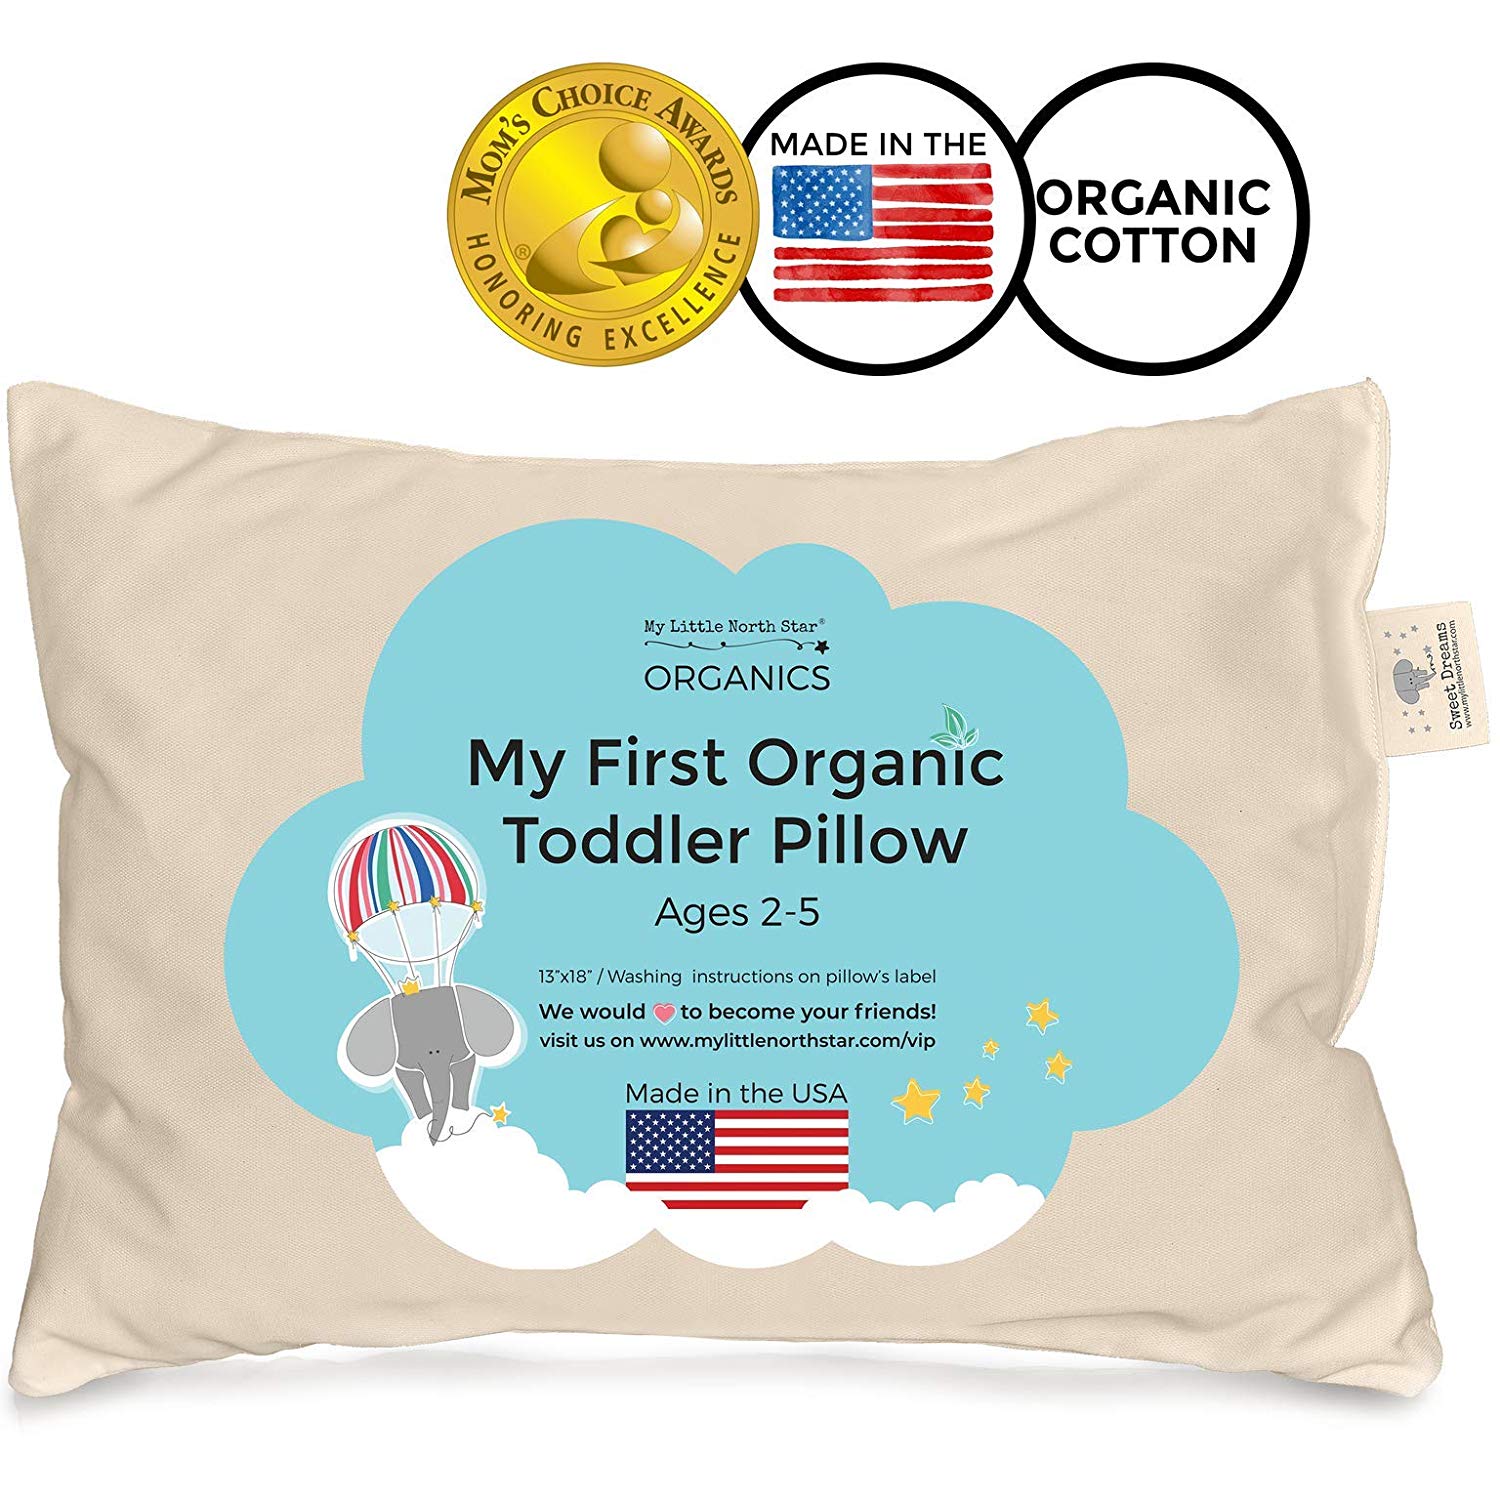 My Little North Star 100% Organic Toddler Pillow